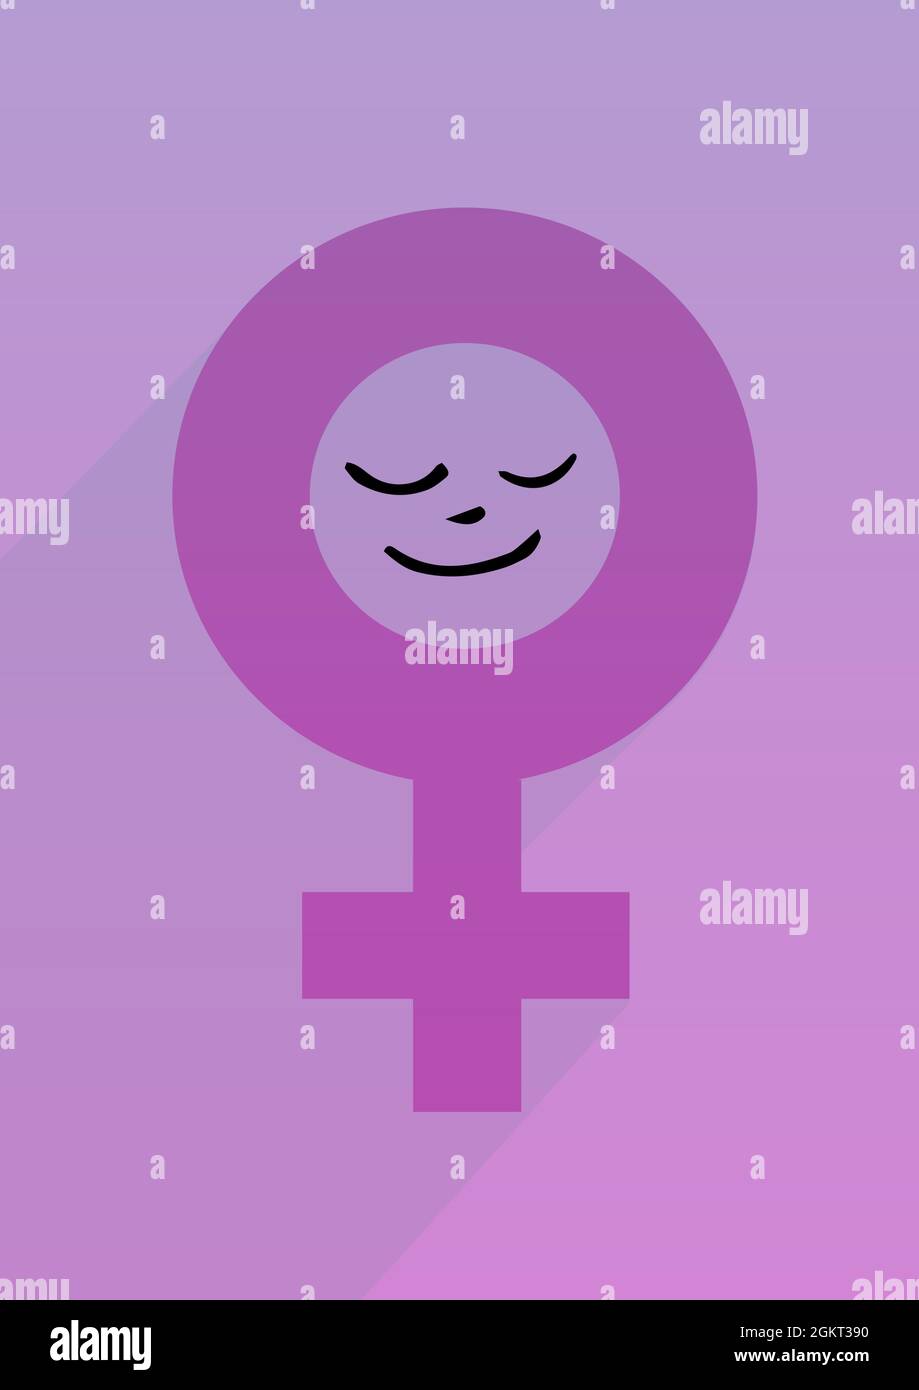 Digitally generated image of female gender symbol icon against purple background Stock Photo